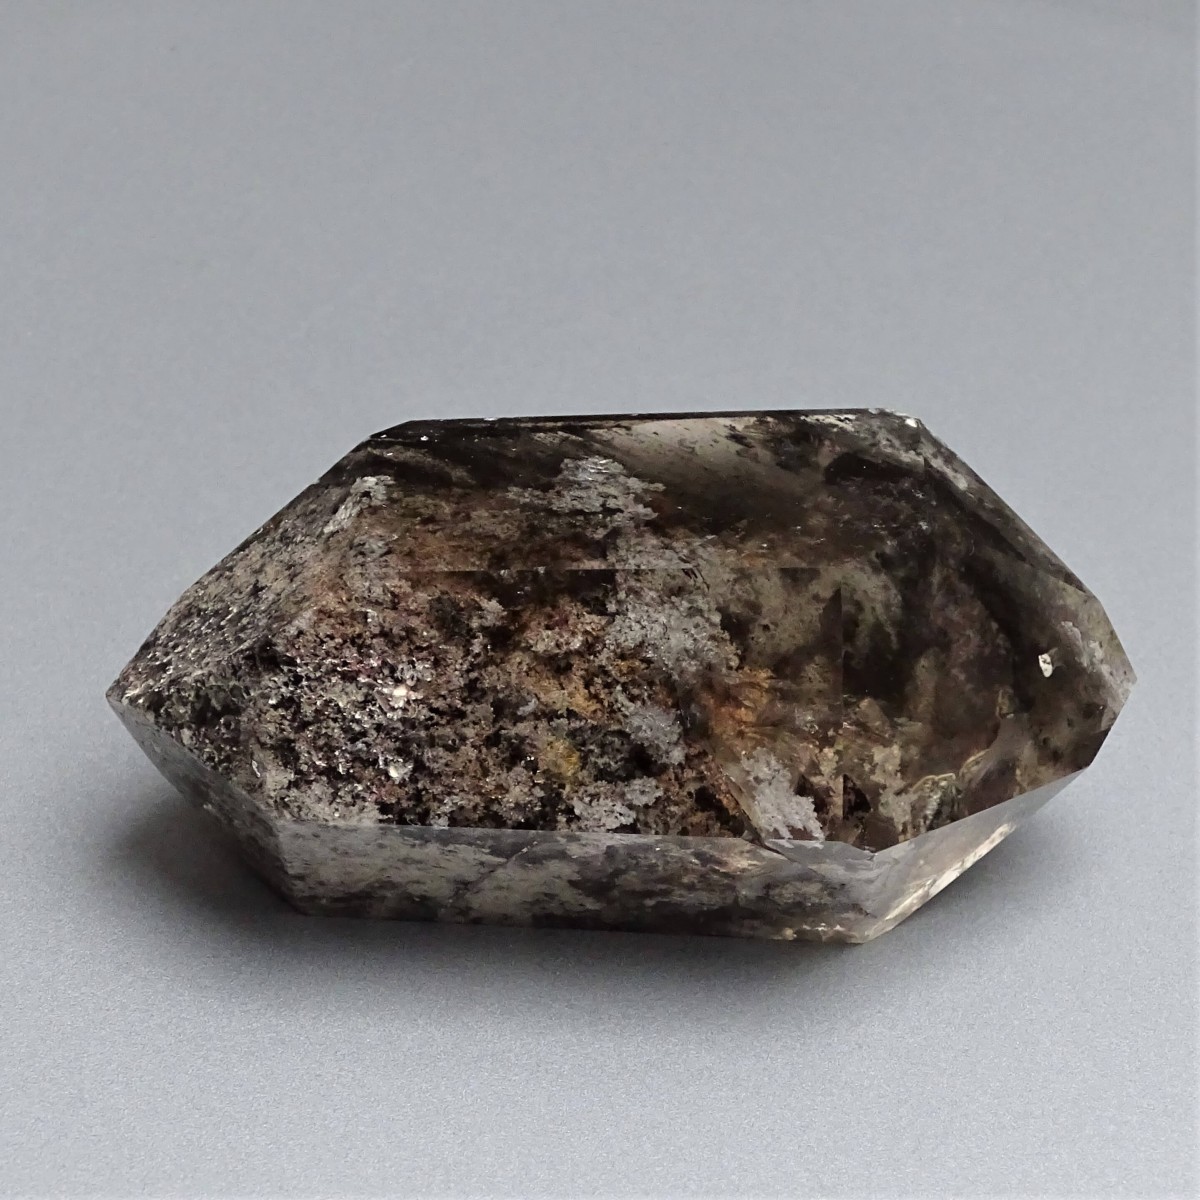 Lodolite (quartz with inclusions) 193g, Brazil